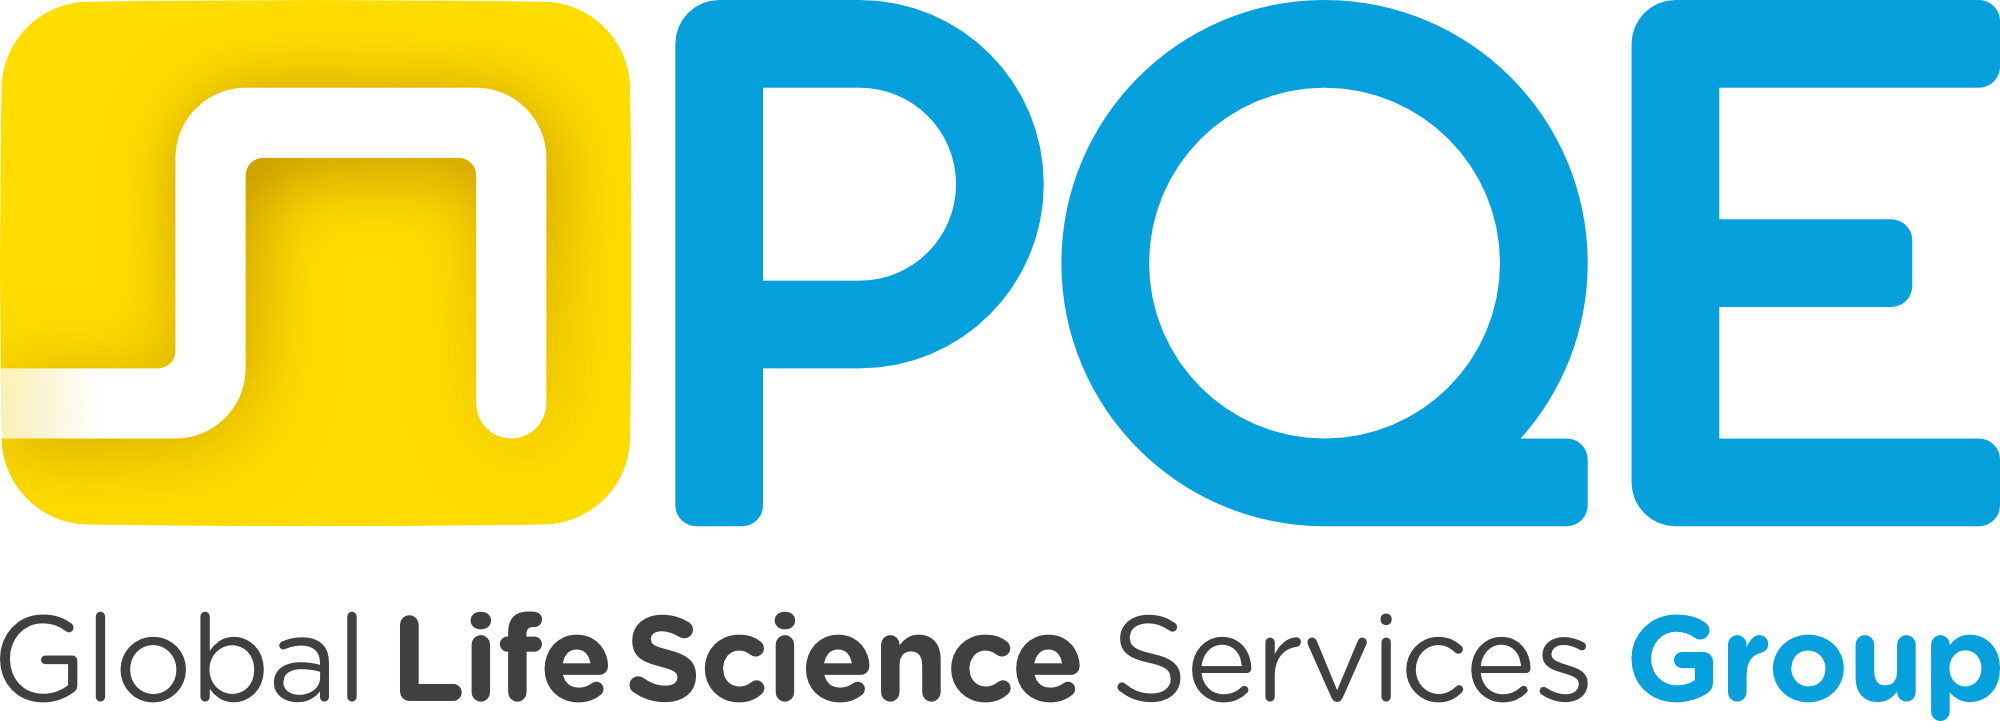 Logo PQE Group - azzurro - 2024